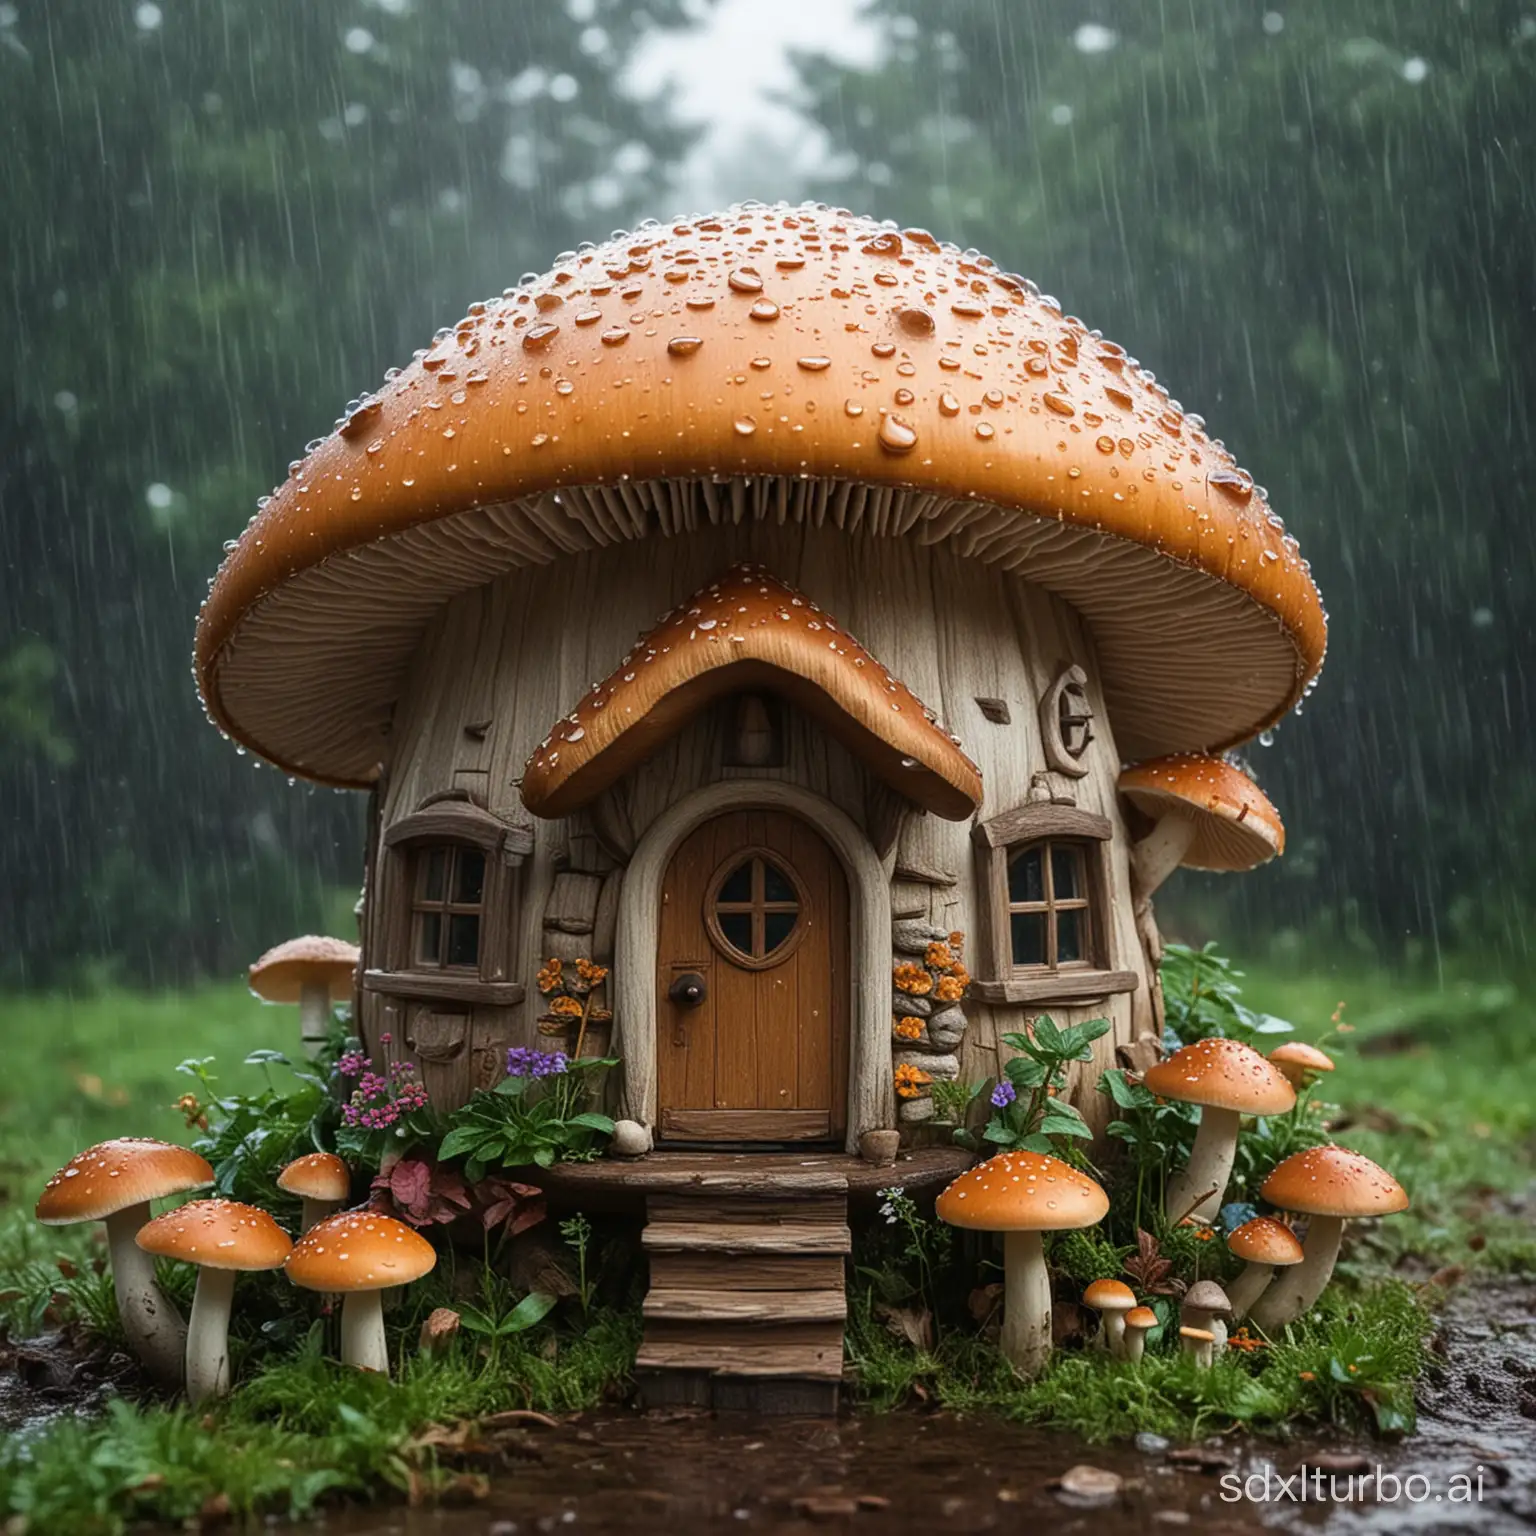 a mushroom house in raining day